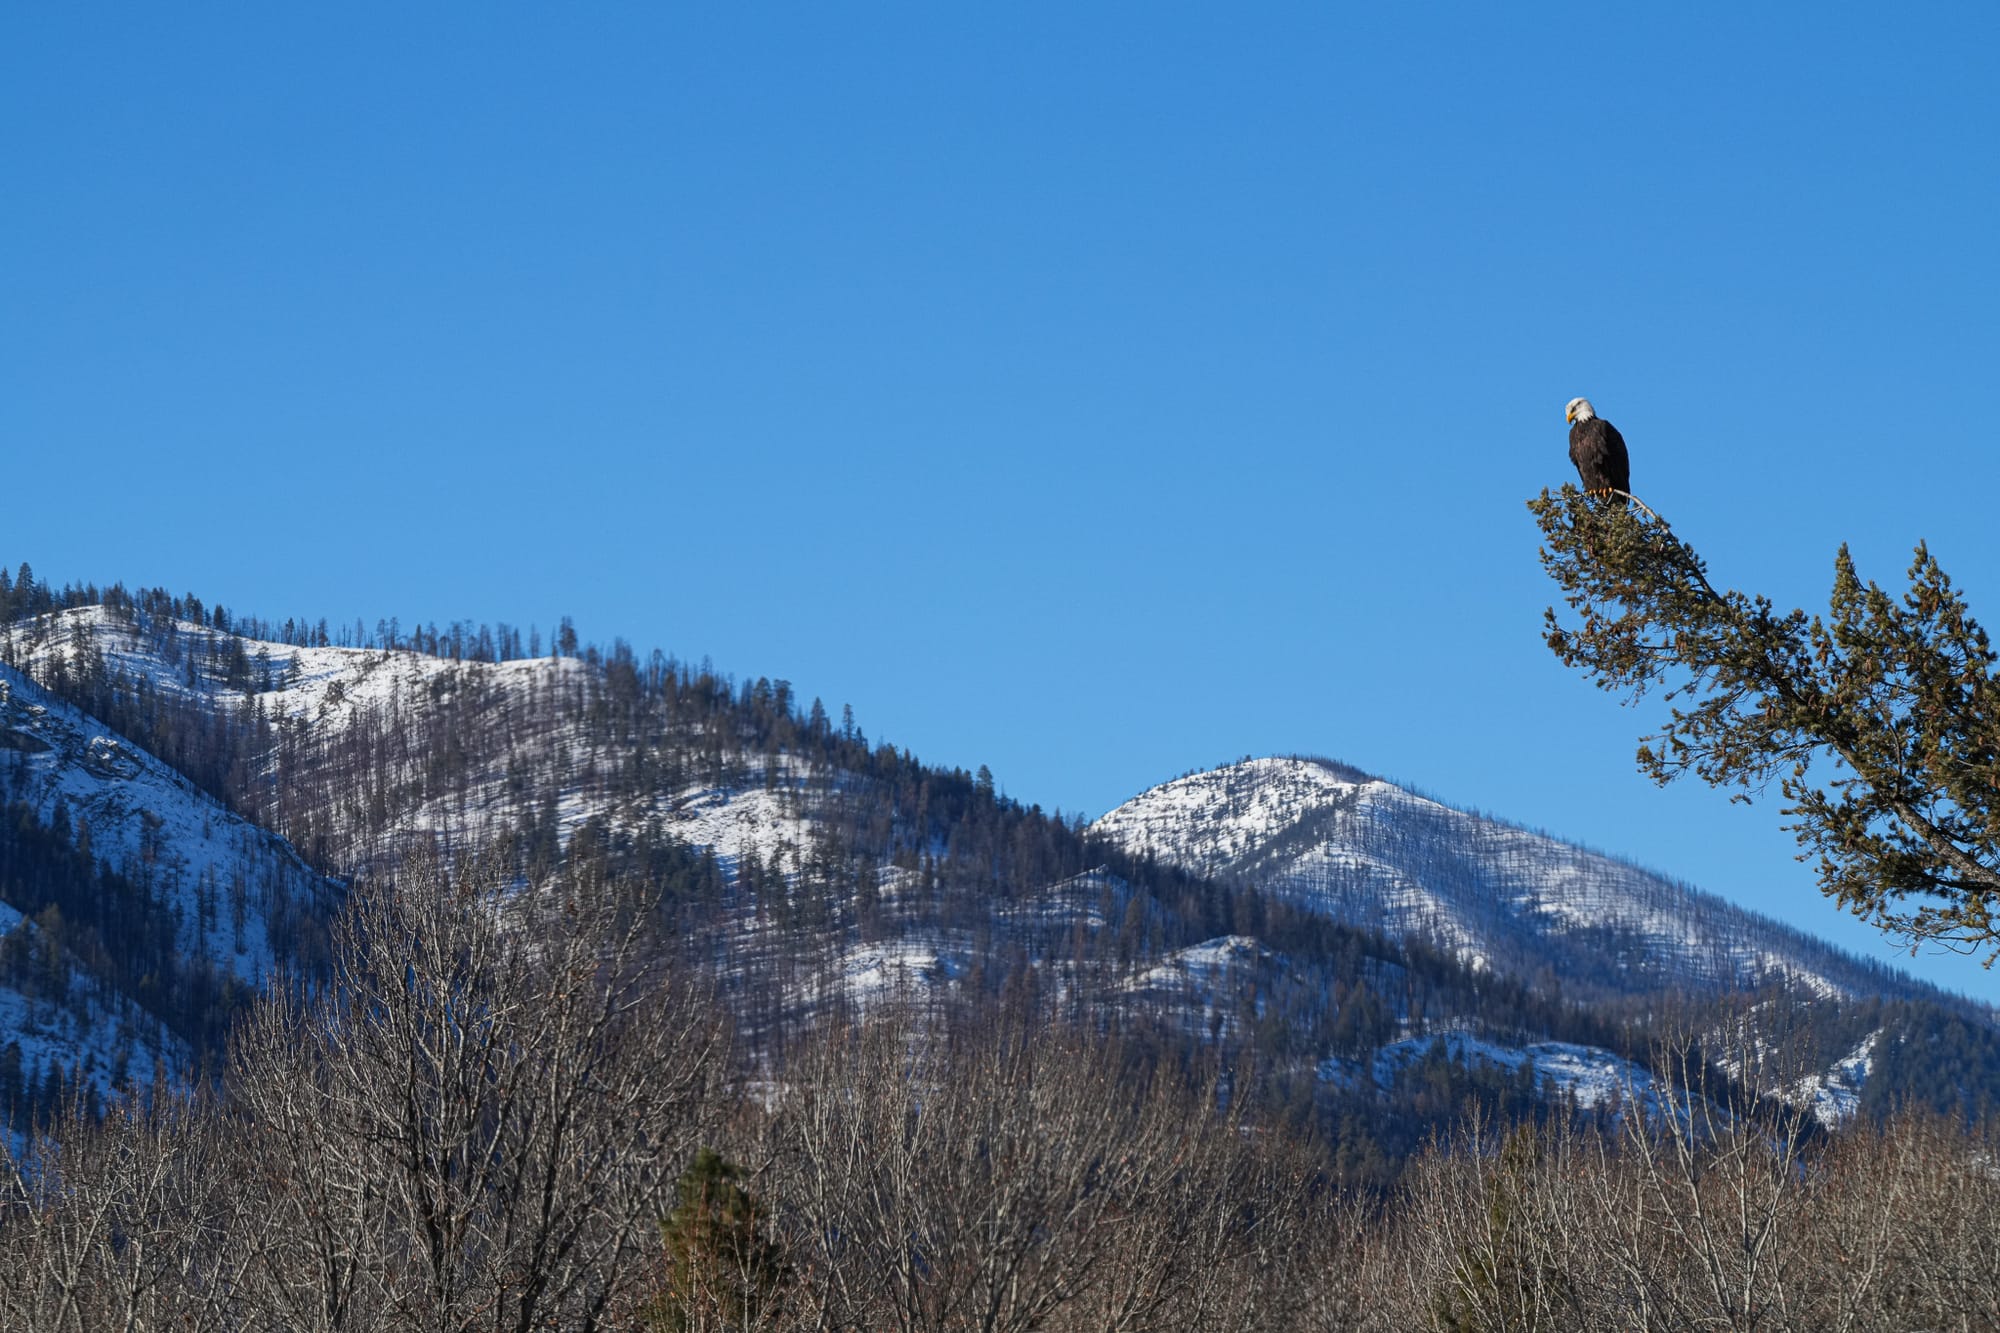 bald eagle perched